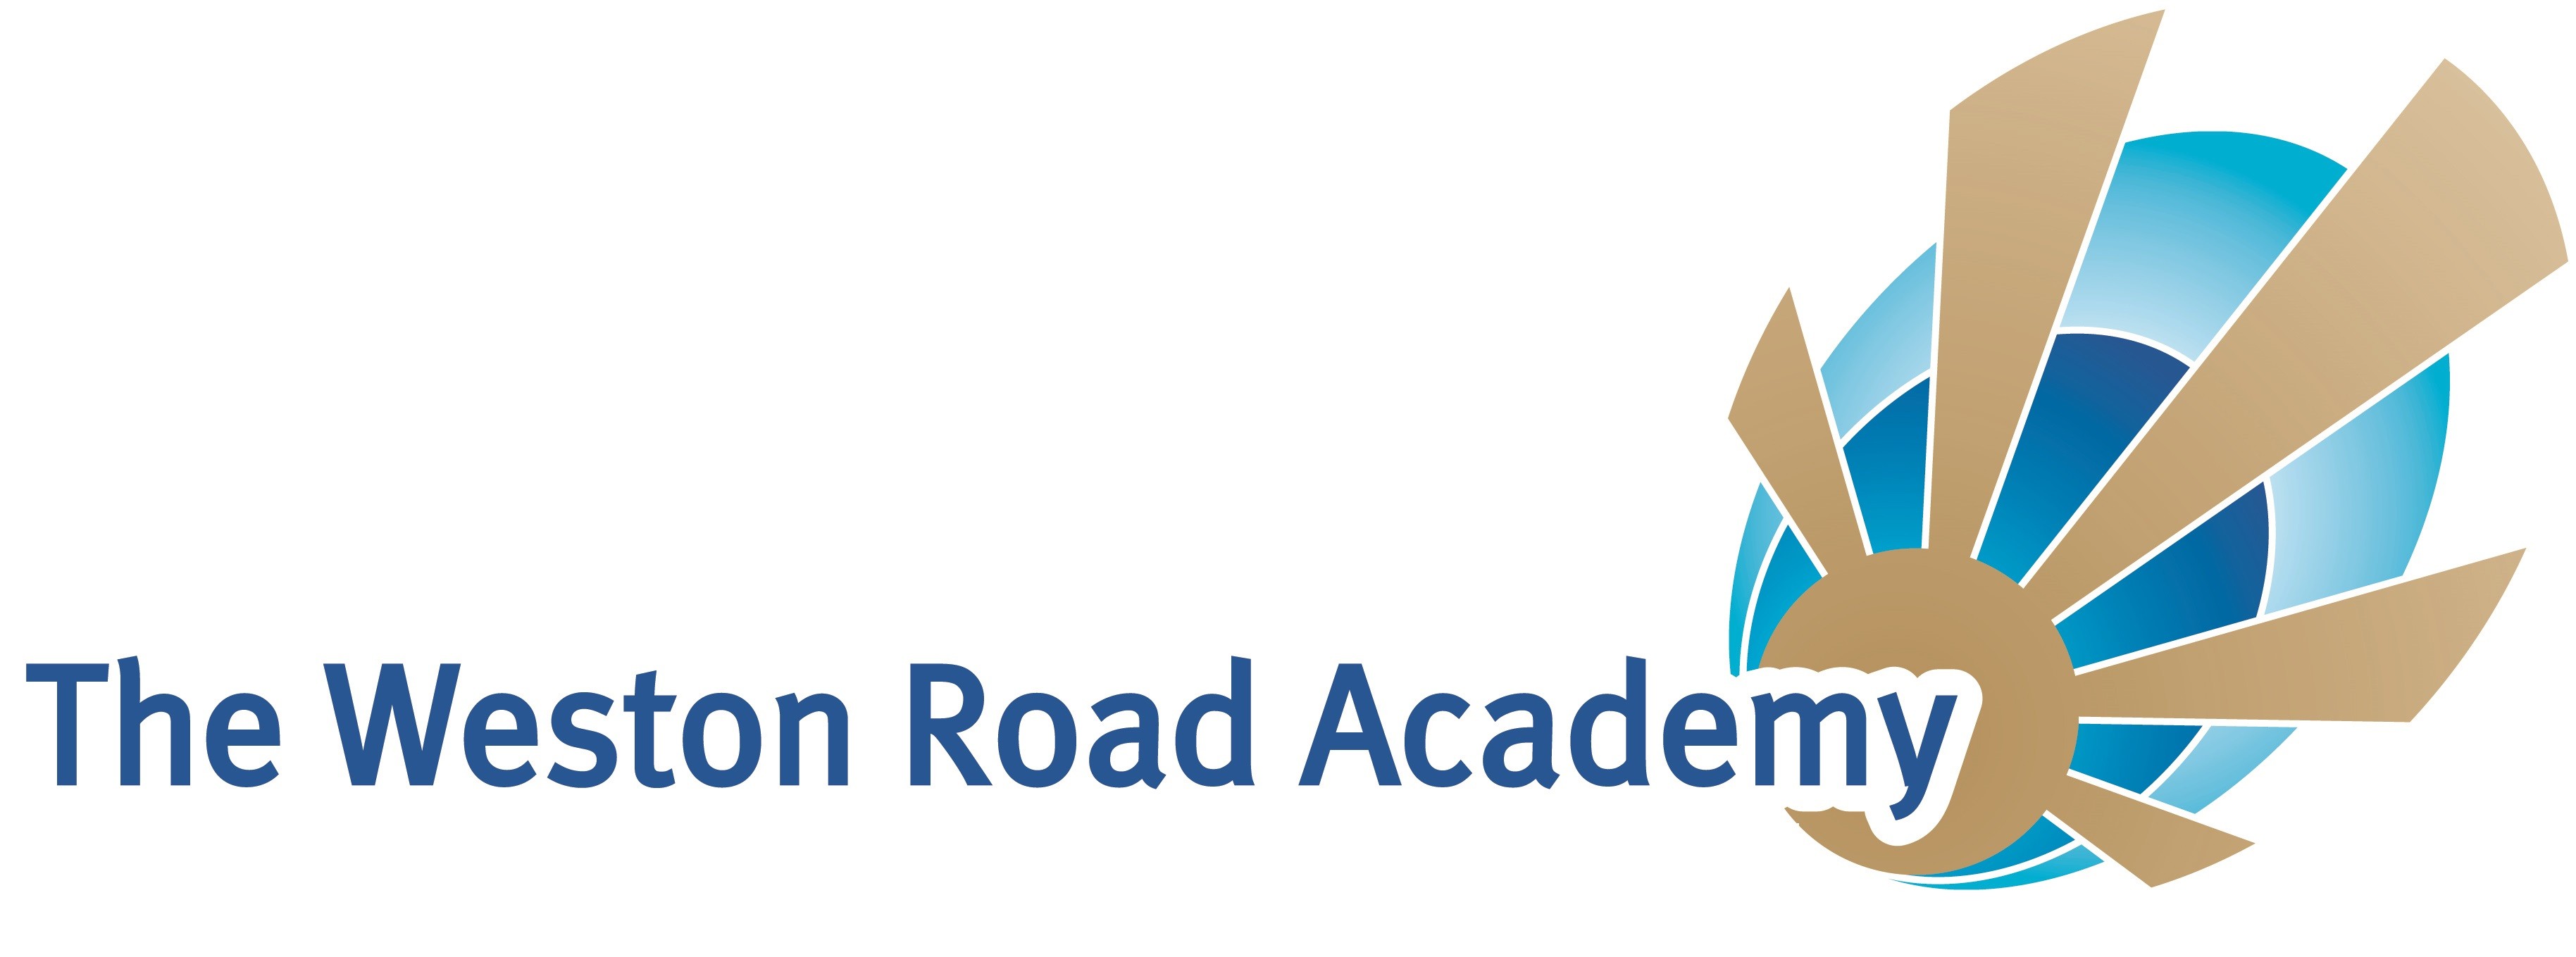 The Weston Road Academy校徽